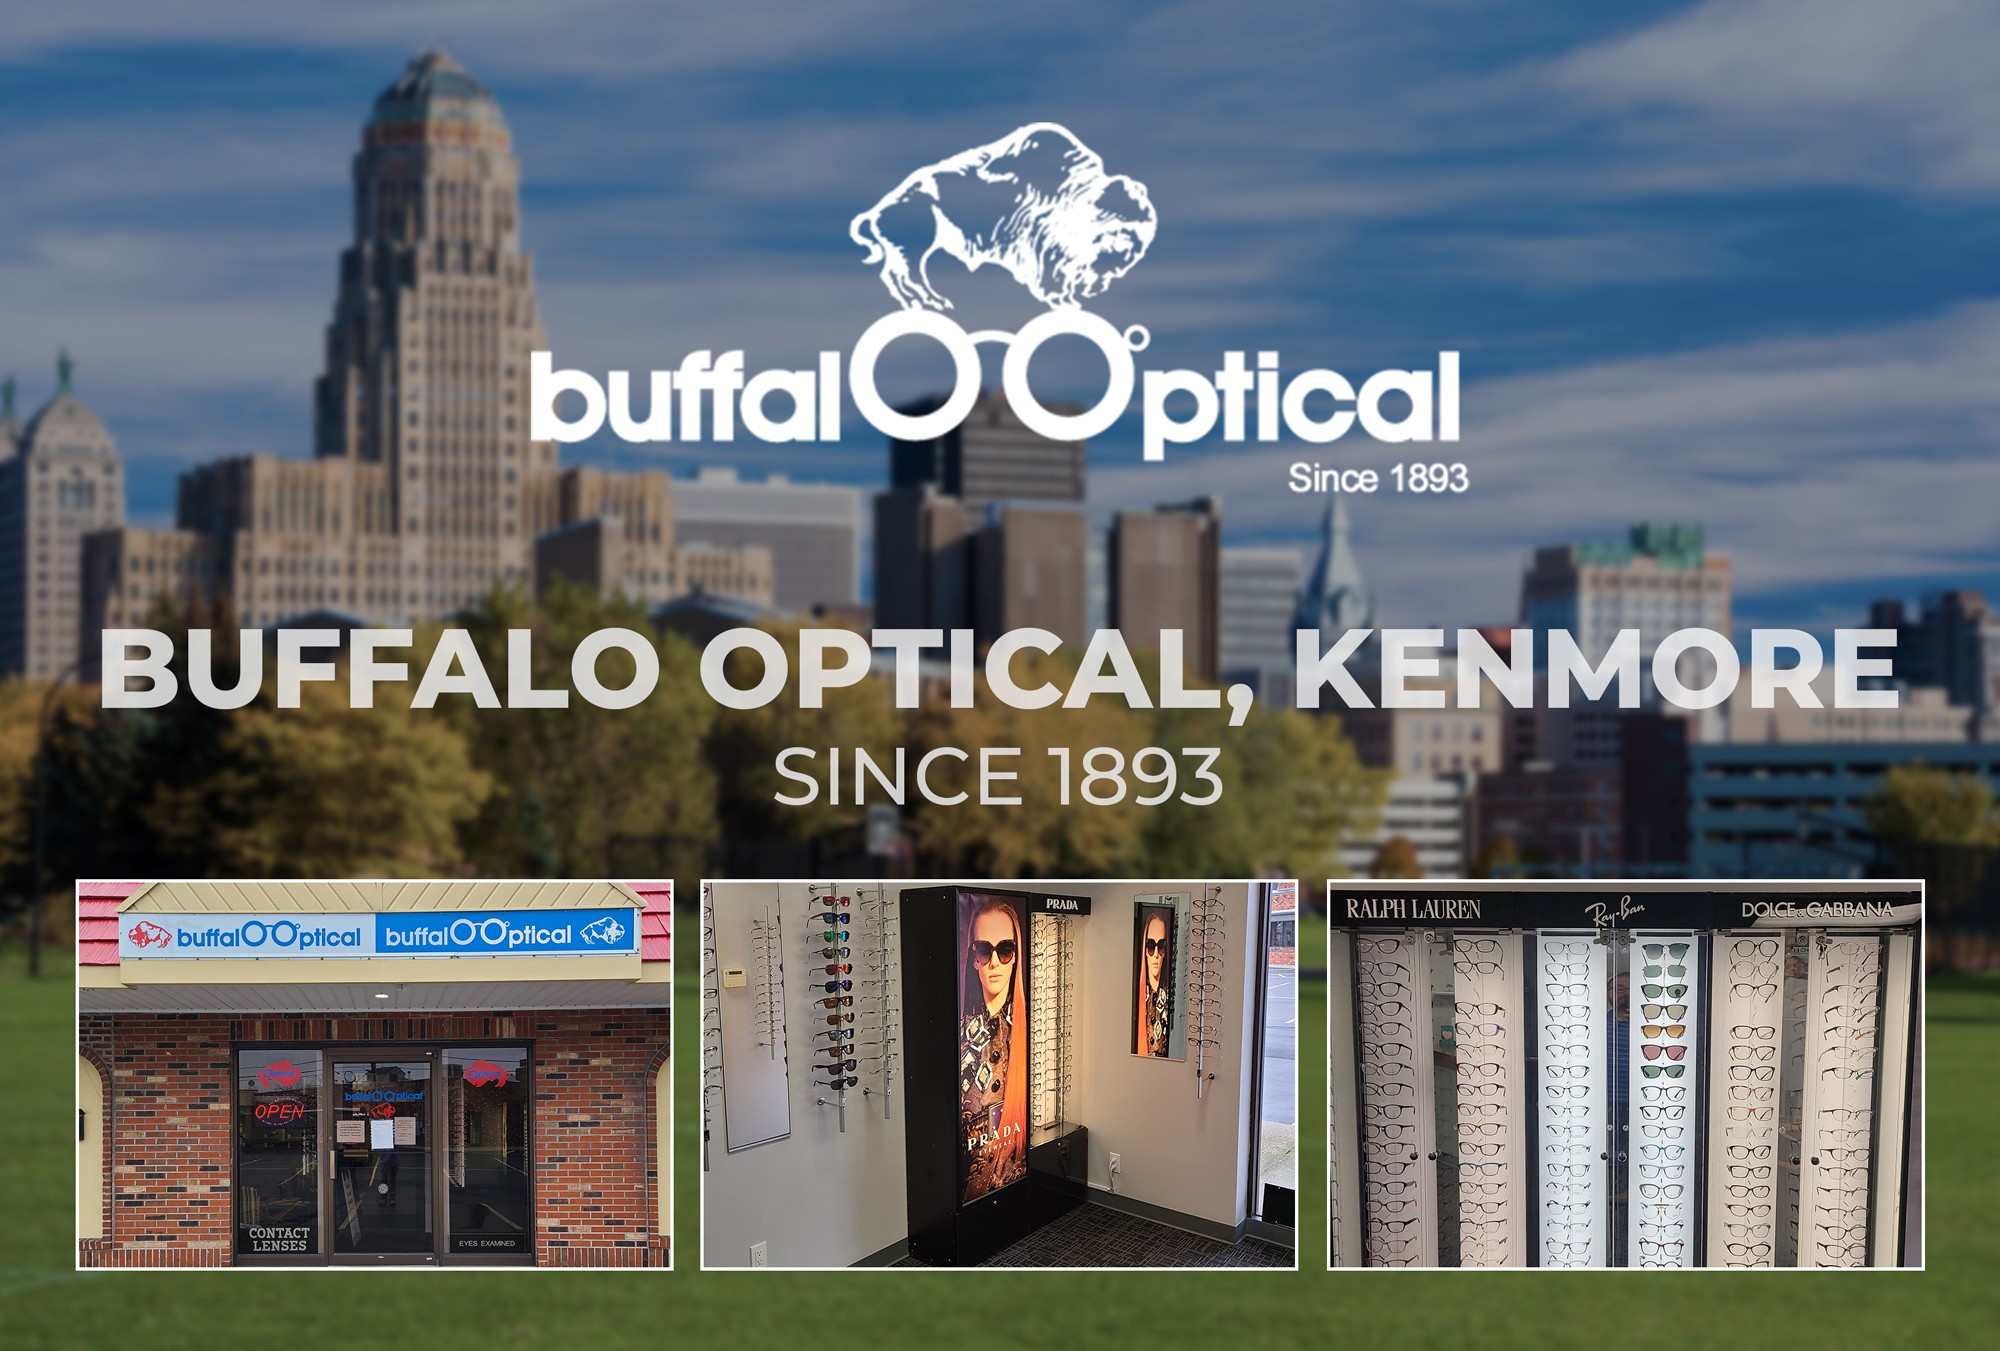 Buffalo Optics Kenmore location served